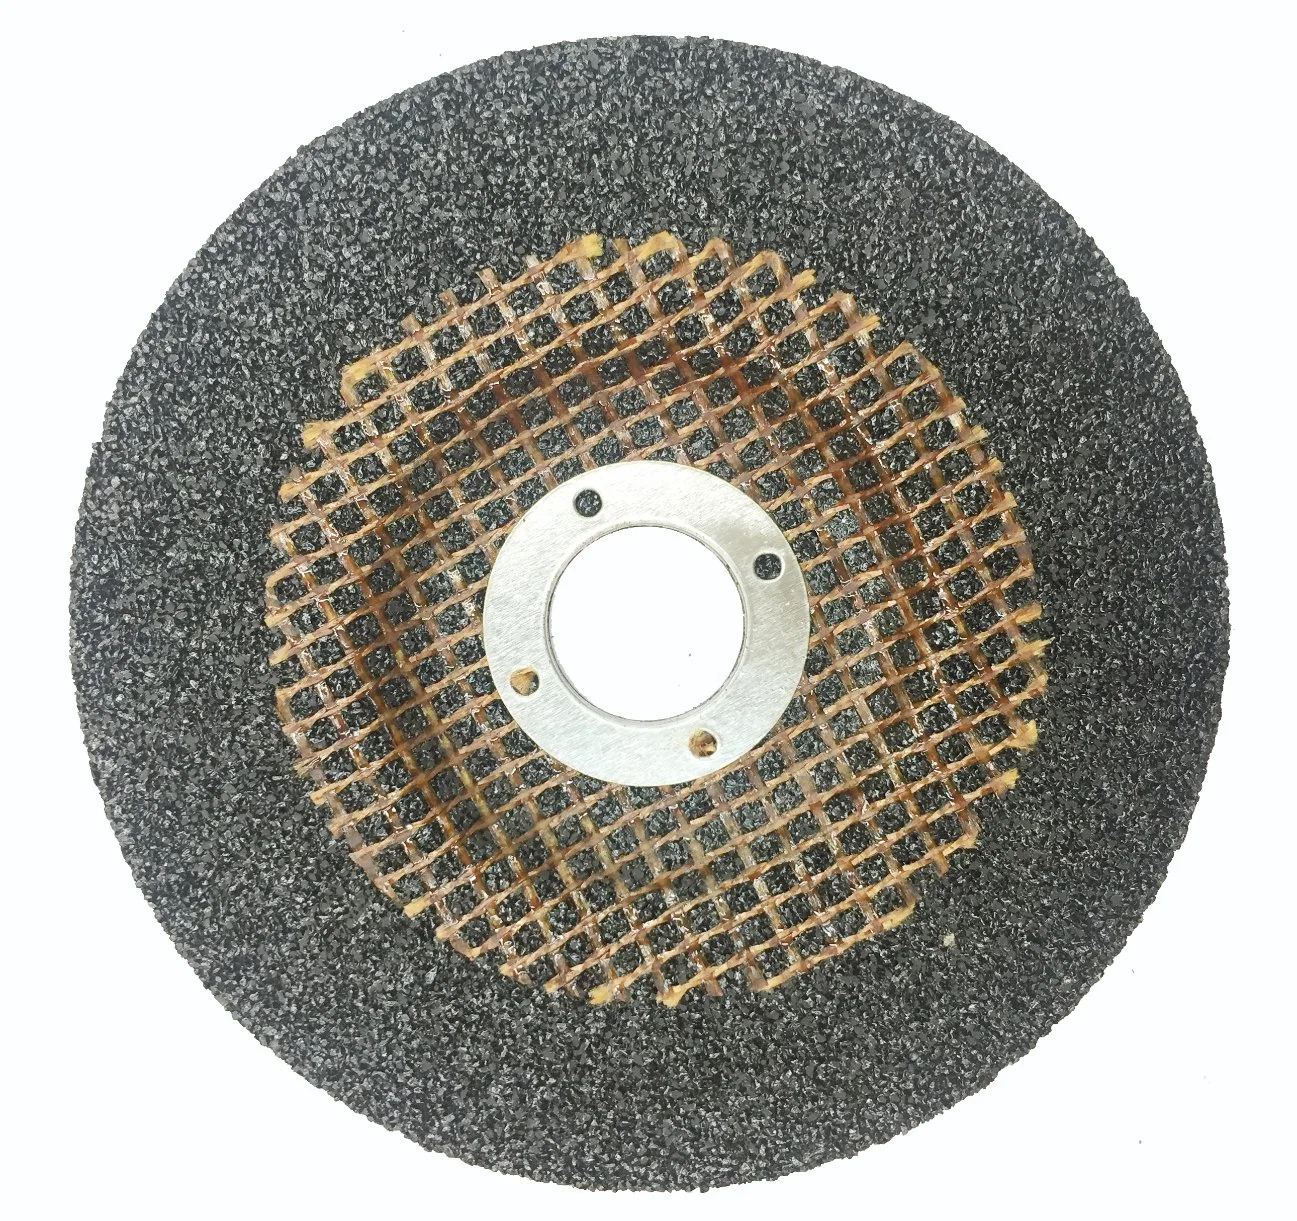 Grinding Abrasive Wheel 100X6X16mm for Grinding Metal